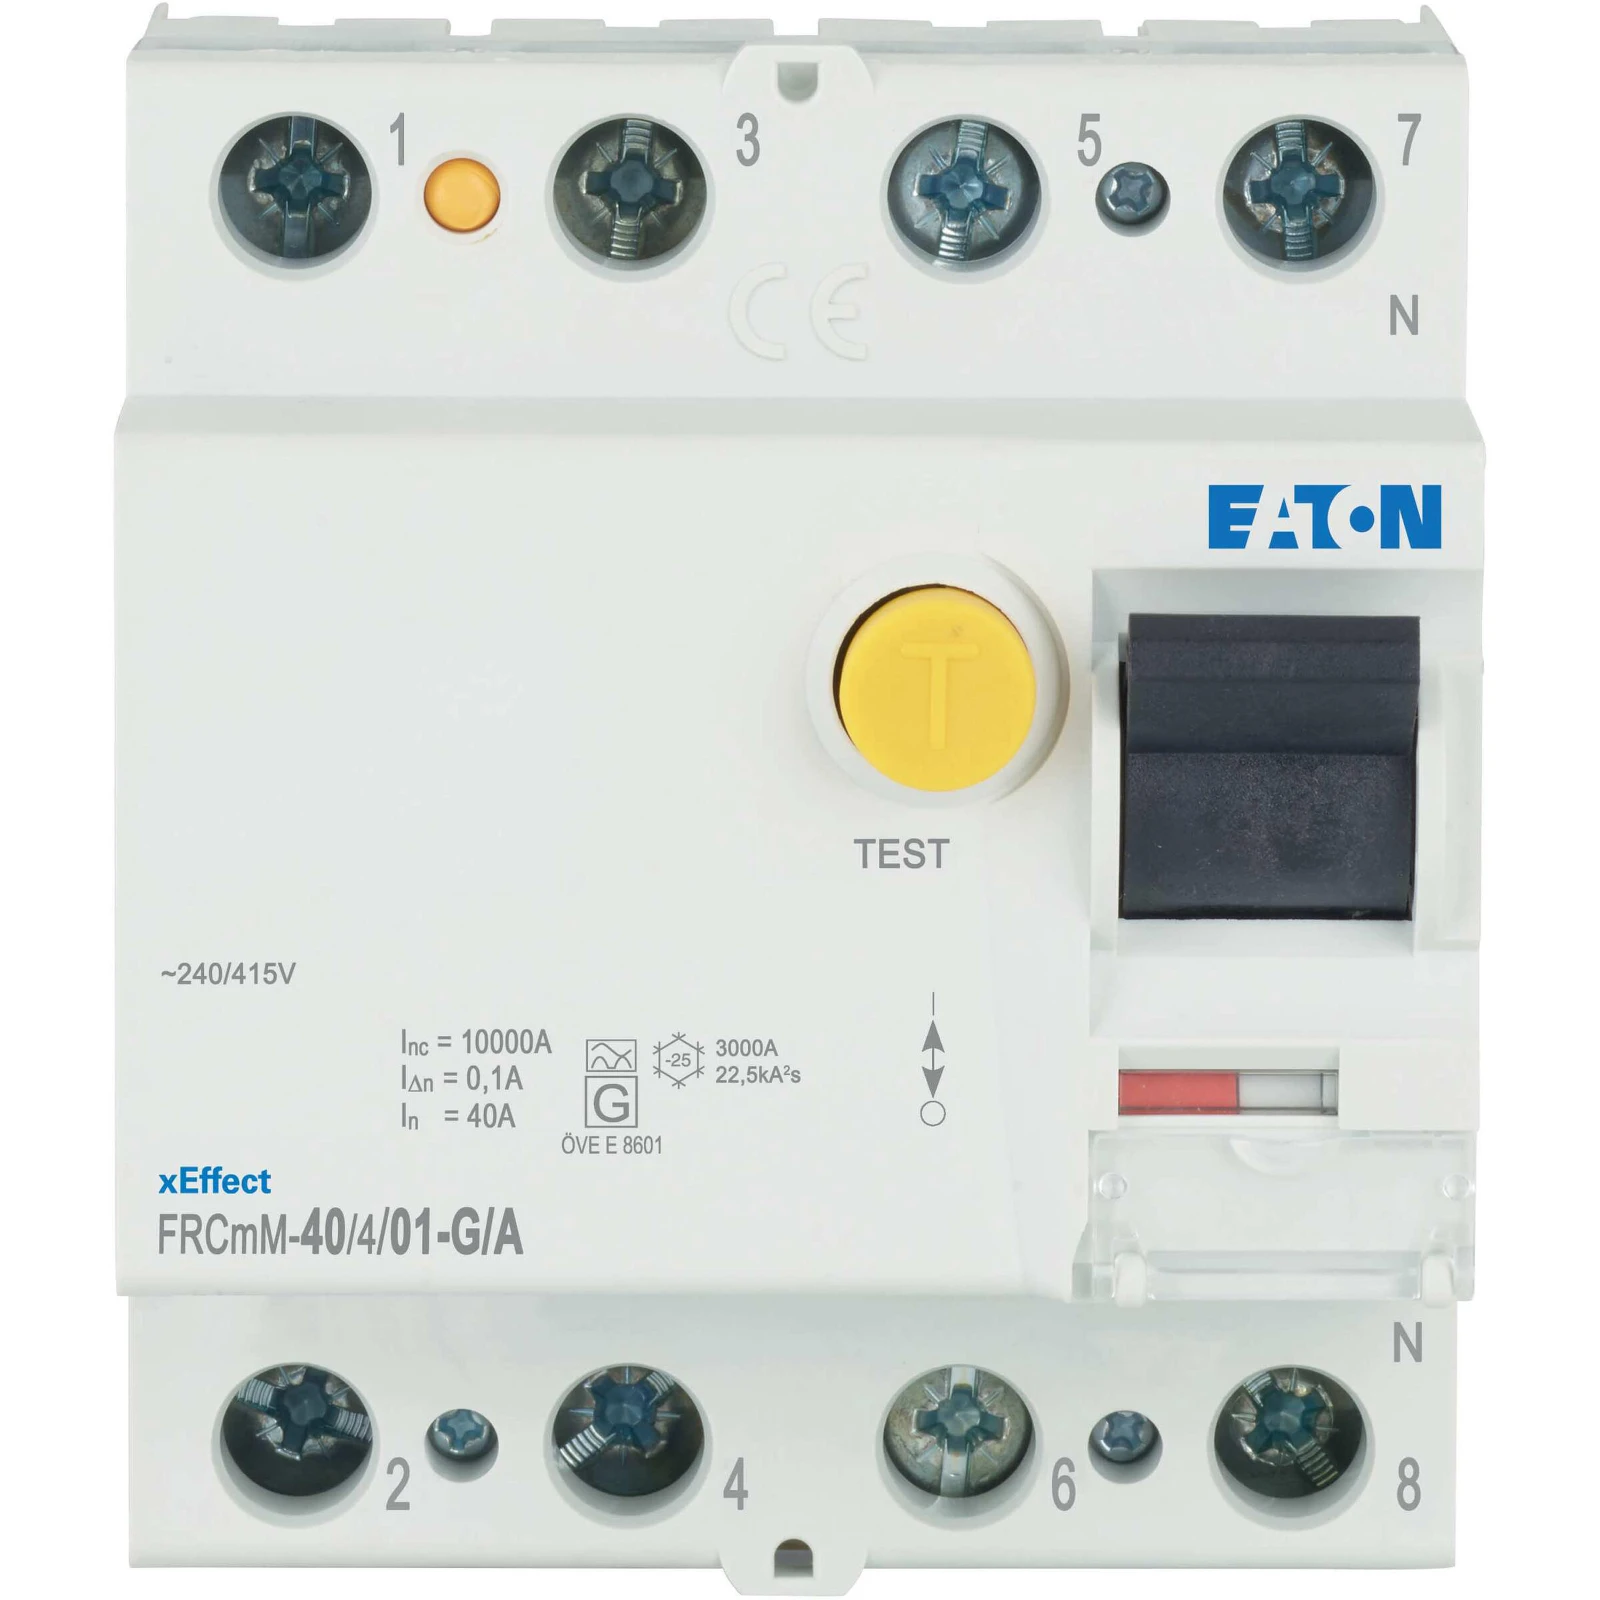 2537214 - Eaton FRCMM-40/4/01-G/A